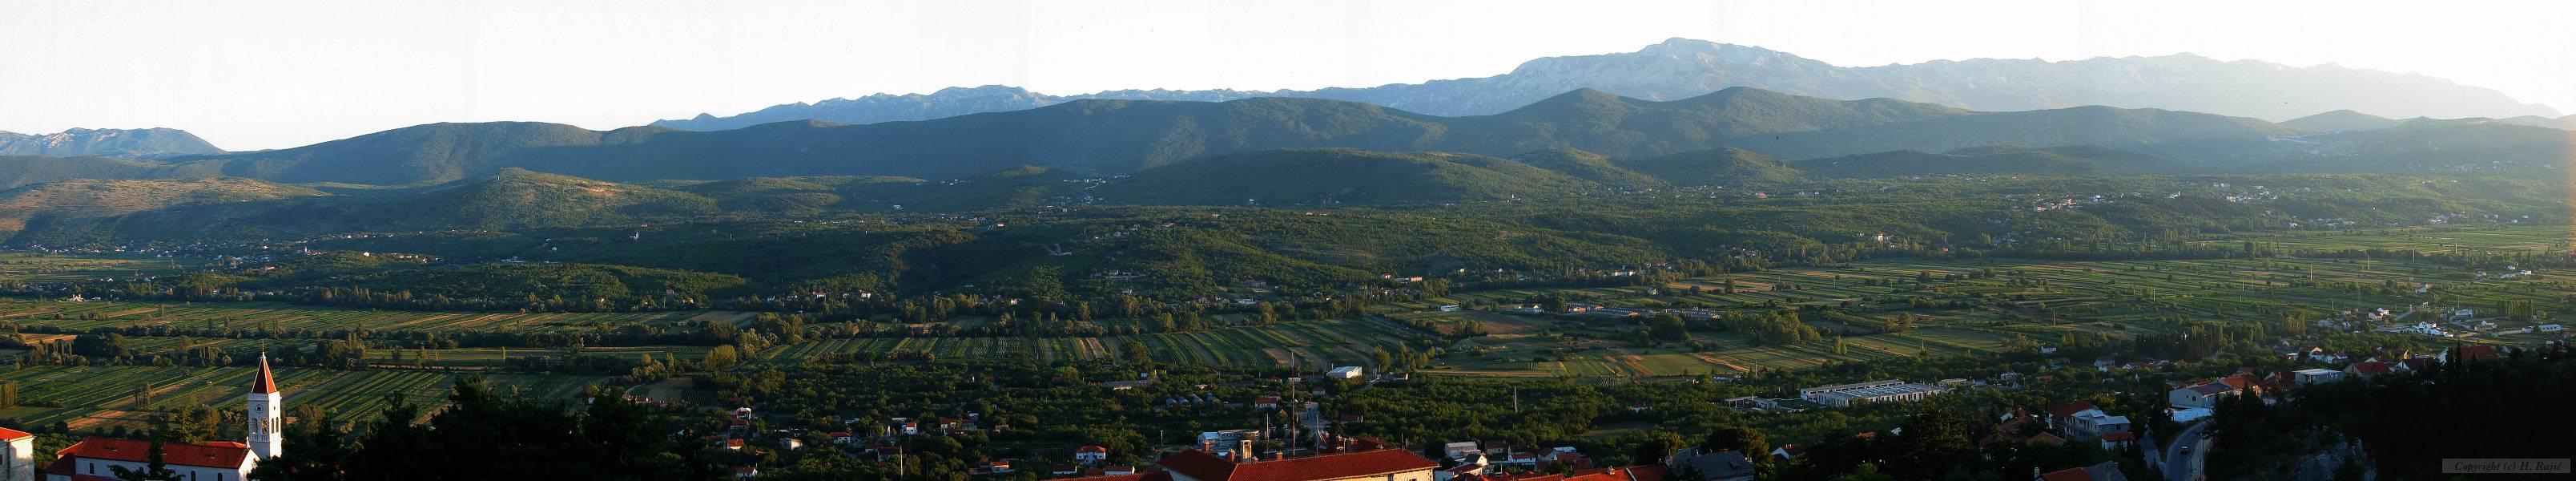 Biokovo from Imotski fortress panorama